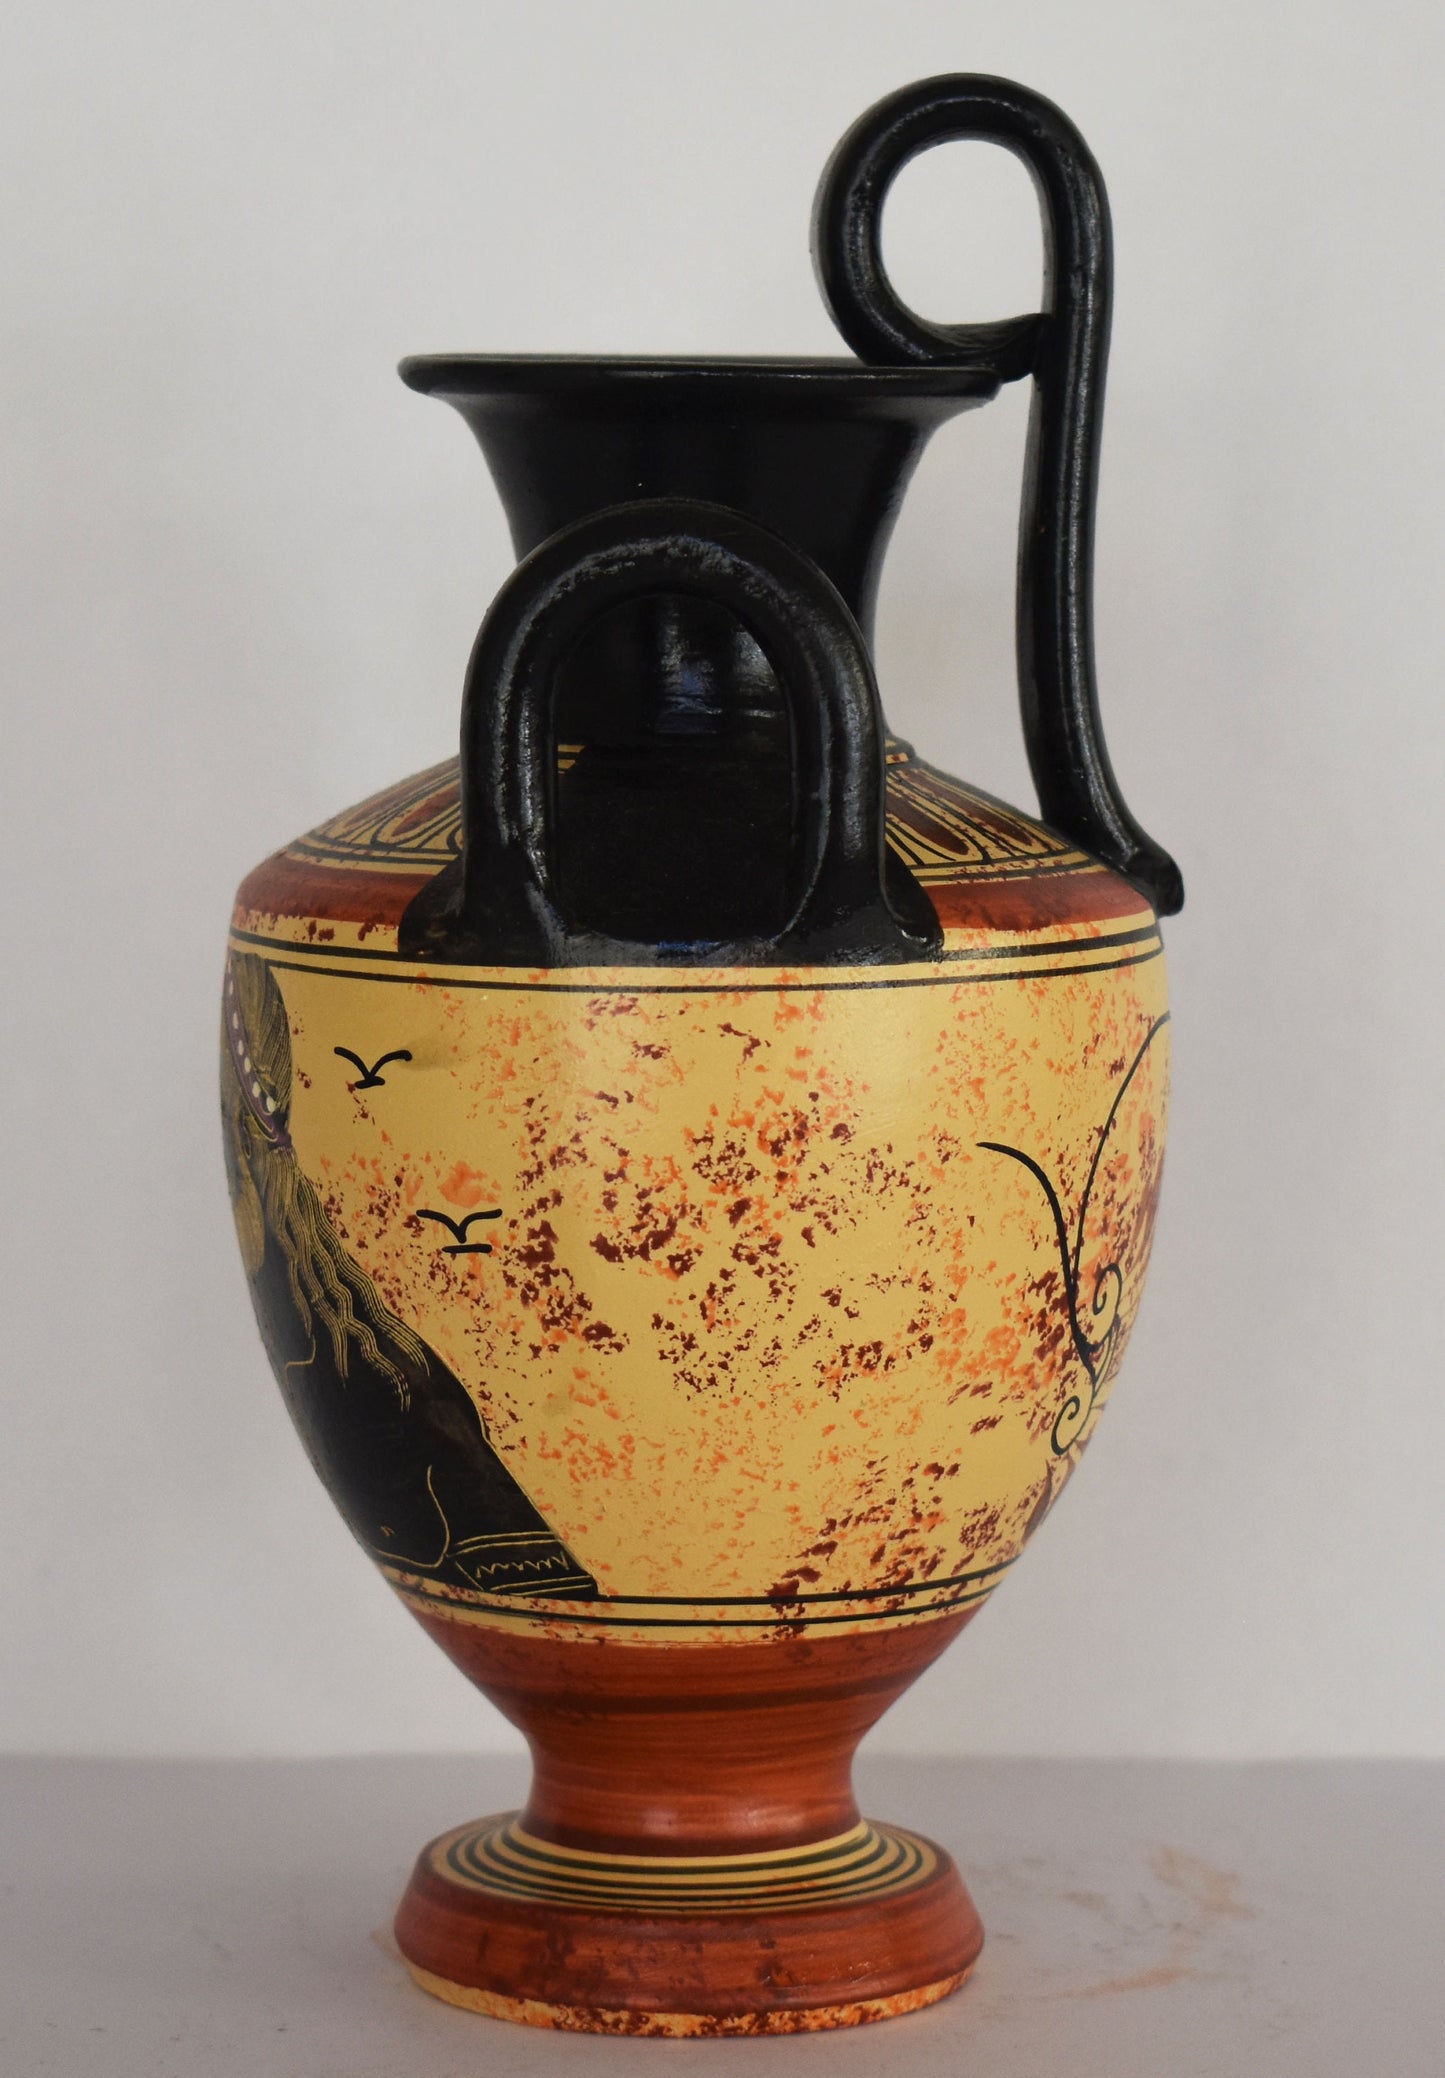 Poseidon Neptune – Greek Roman God of the Sea, Storms, Earthquakes and Horses - Floral design - Ceramic Vase